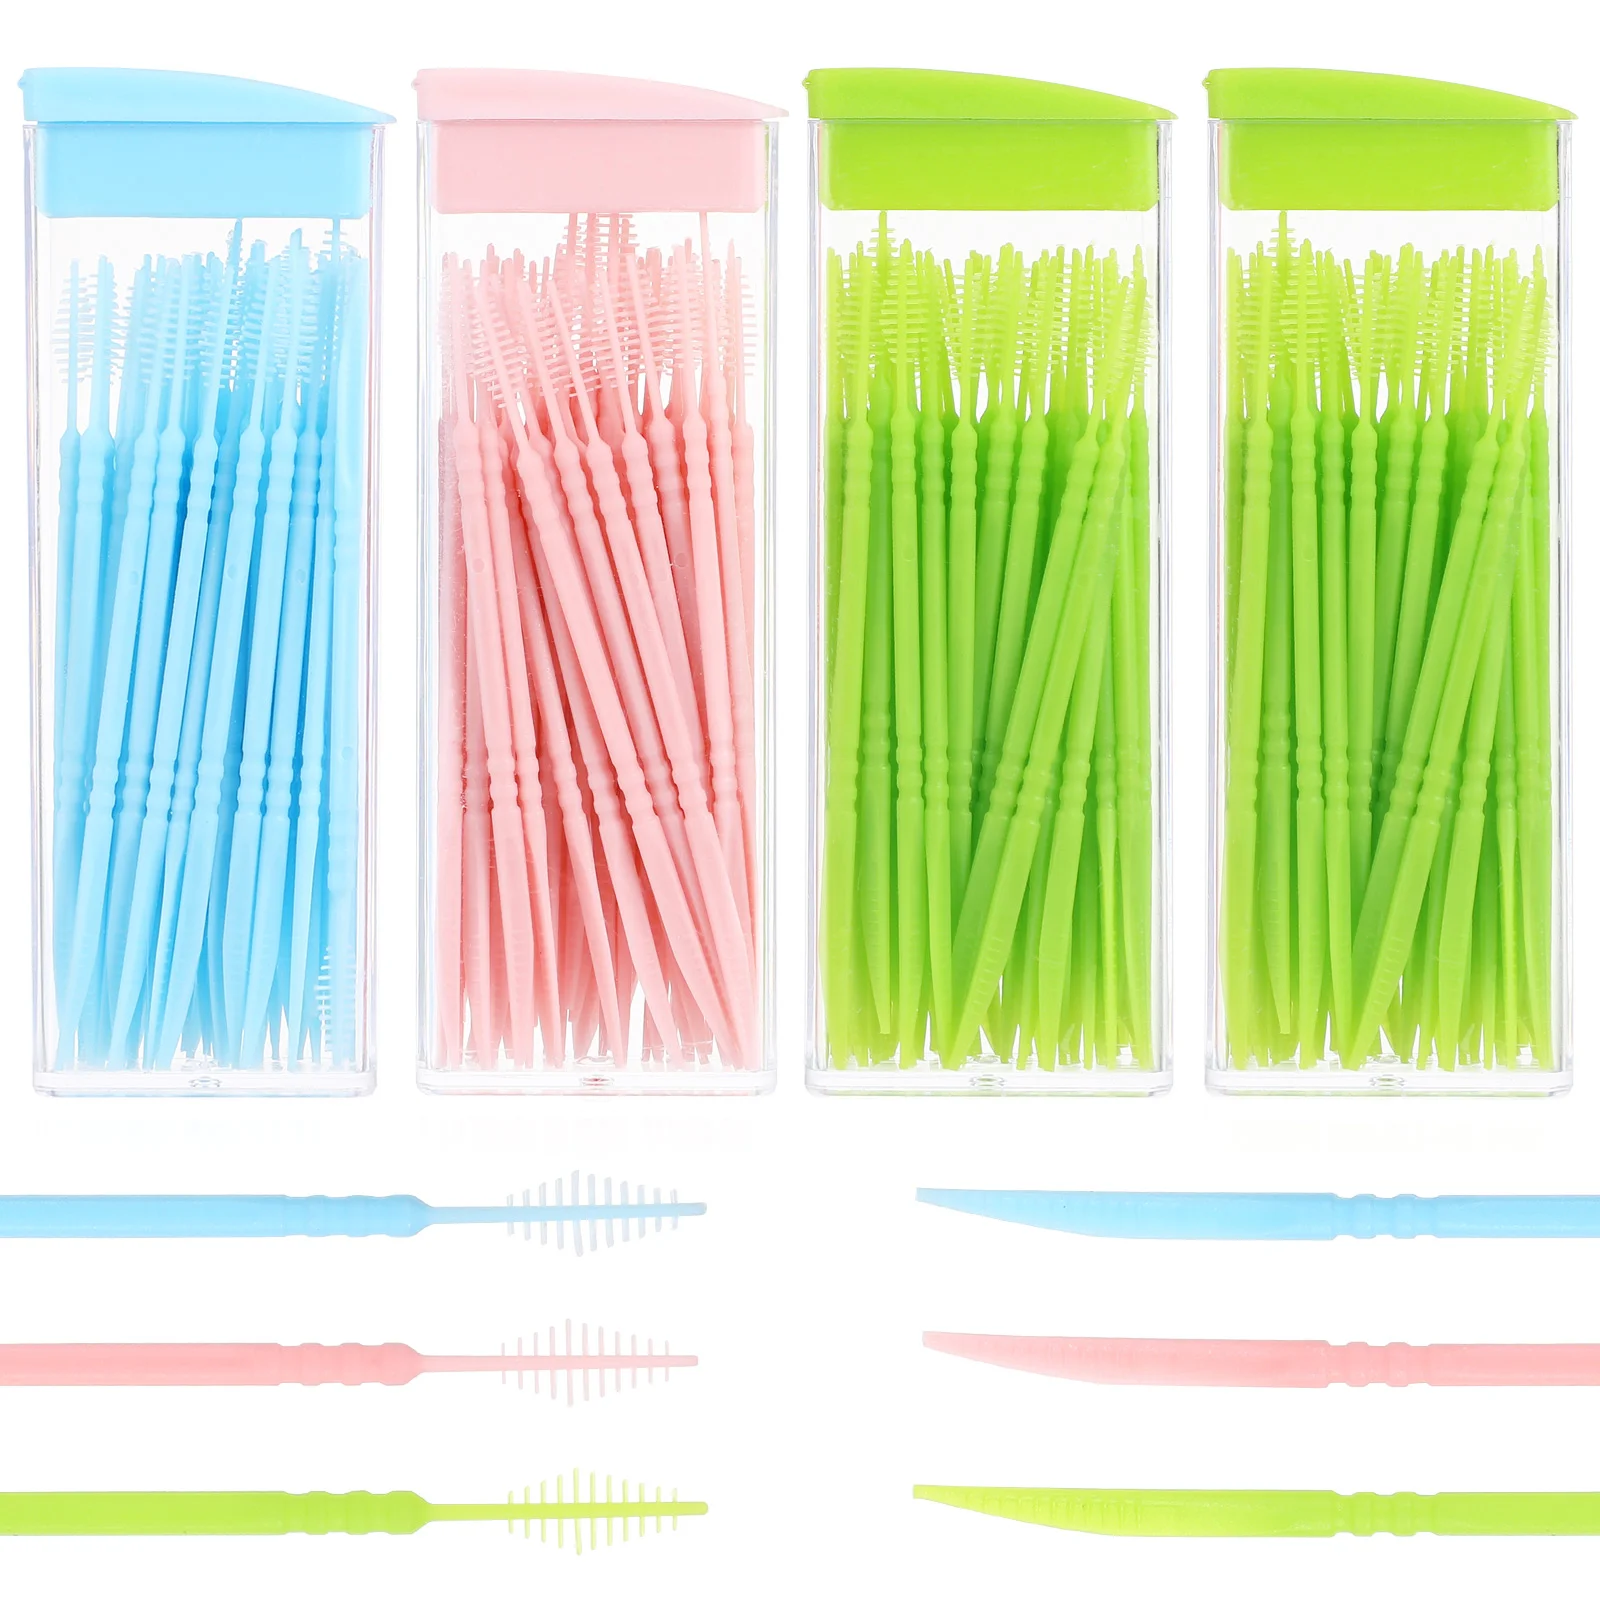 

200pcs Double-ended Dental Plastic Toothpicks Brush Teeth Sticks Dental Oral Care Tooth Sticks(Random Color)